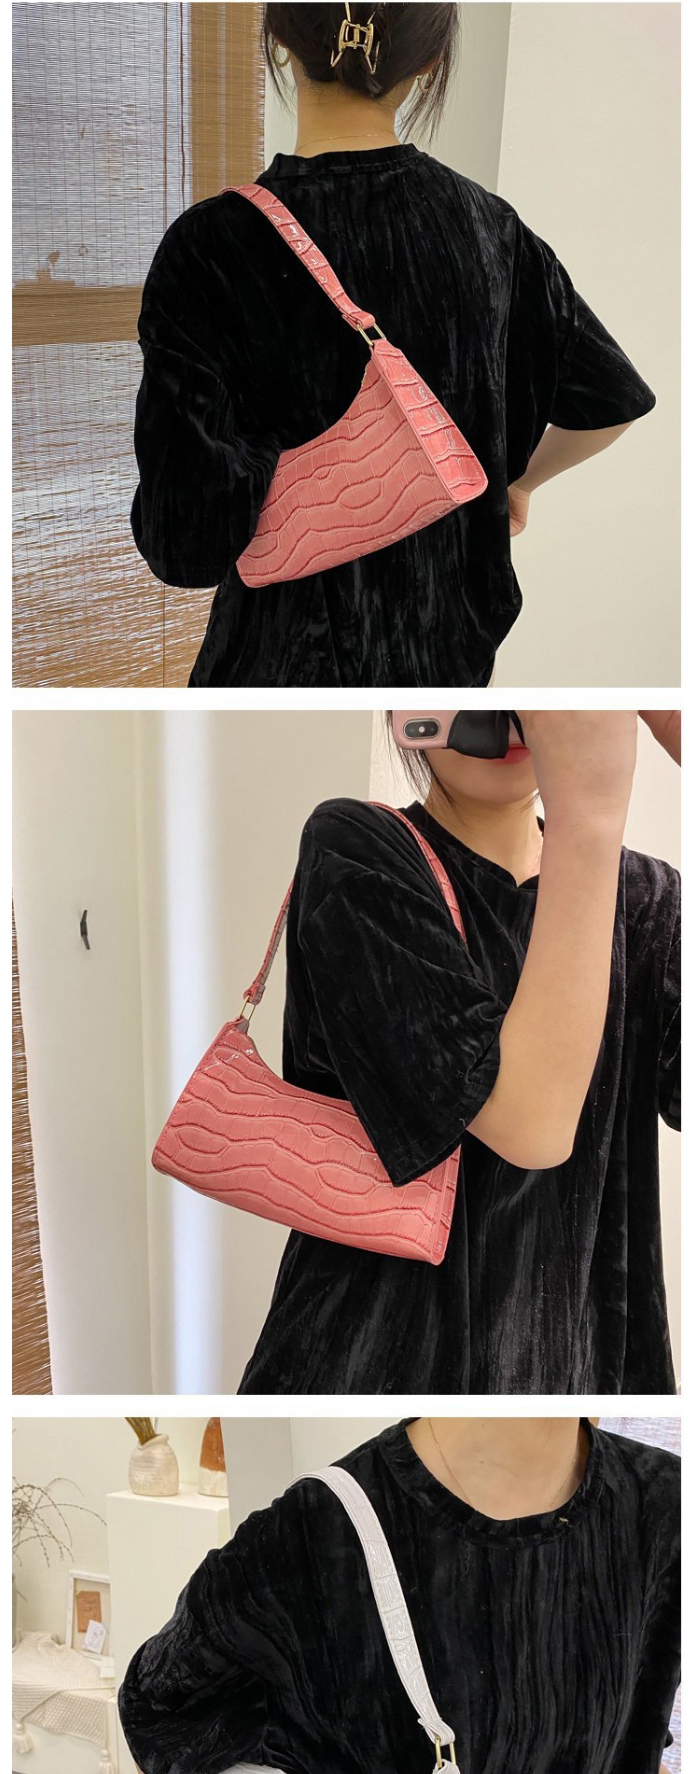 Fashion Off White Stone Pattern One-shoulder Portable Patent Leather Shoulder Bag,Messenger bags